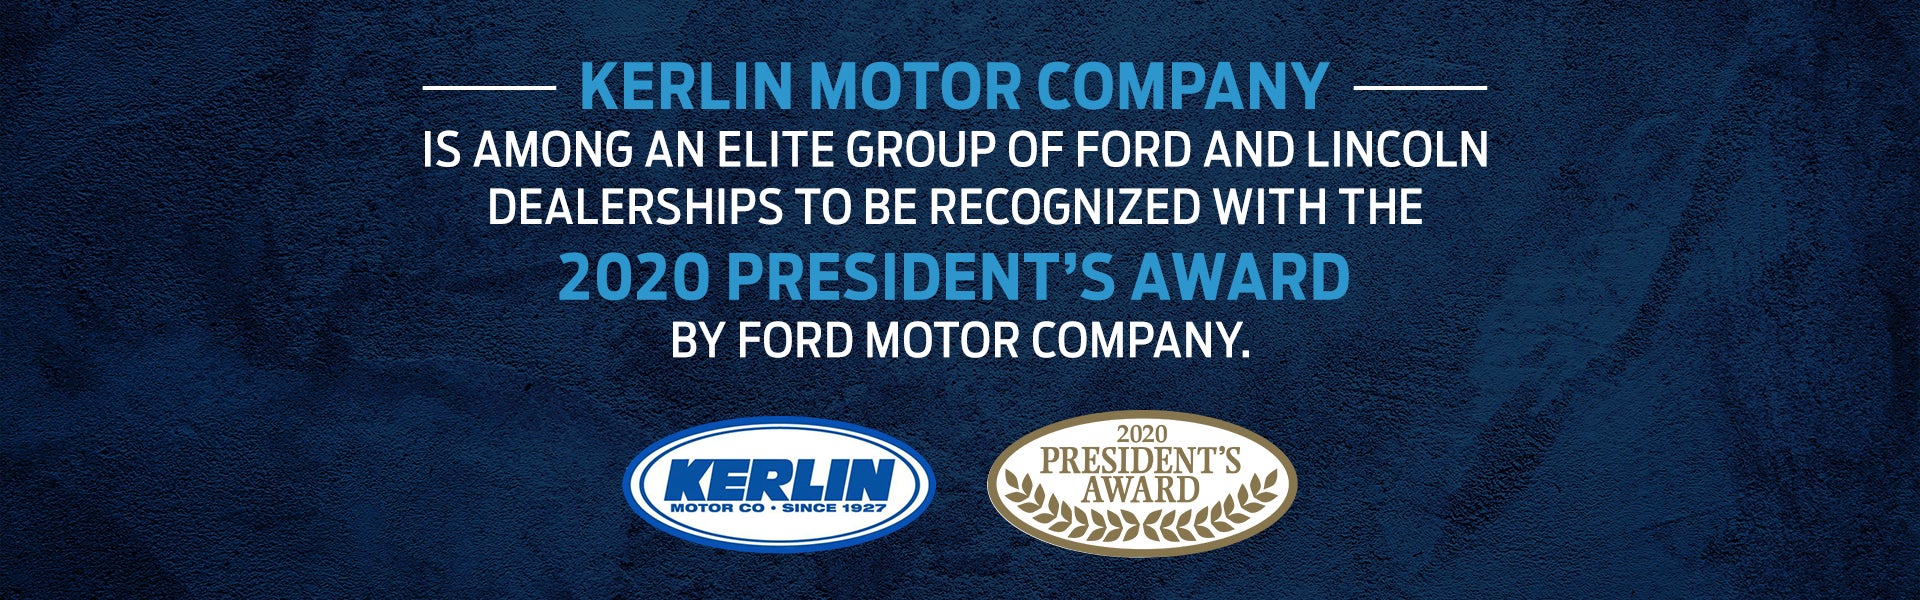 Kerlin Motor Company, 2020 President's Award Winner